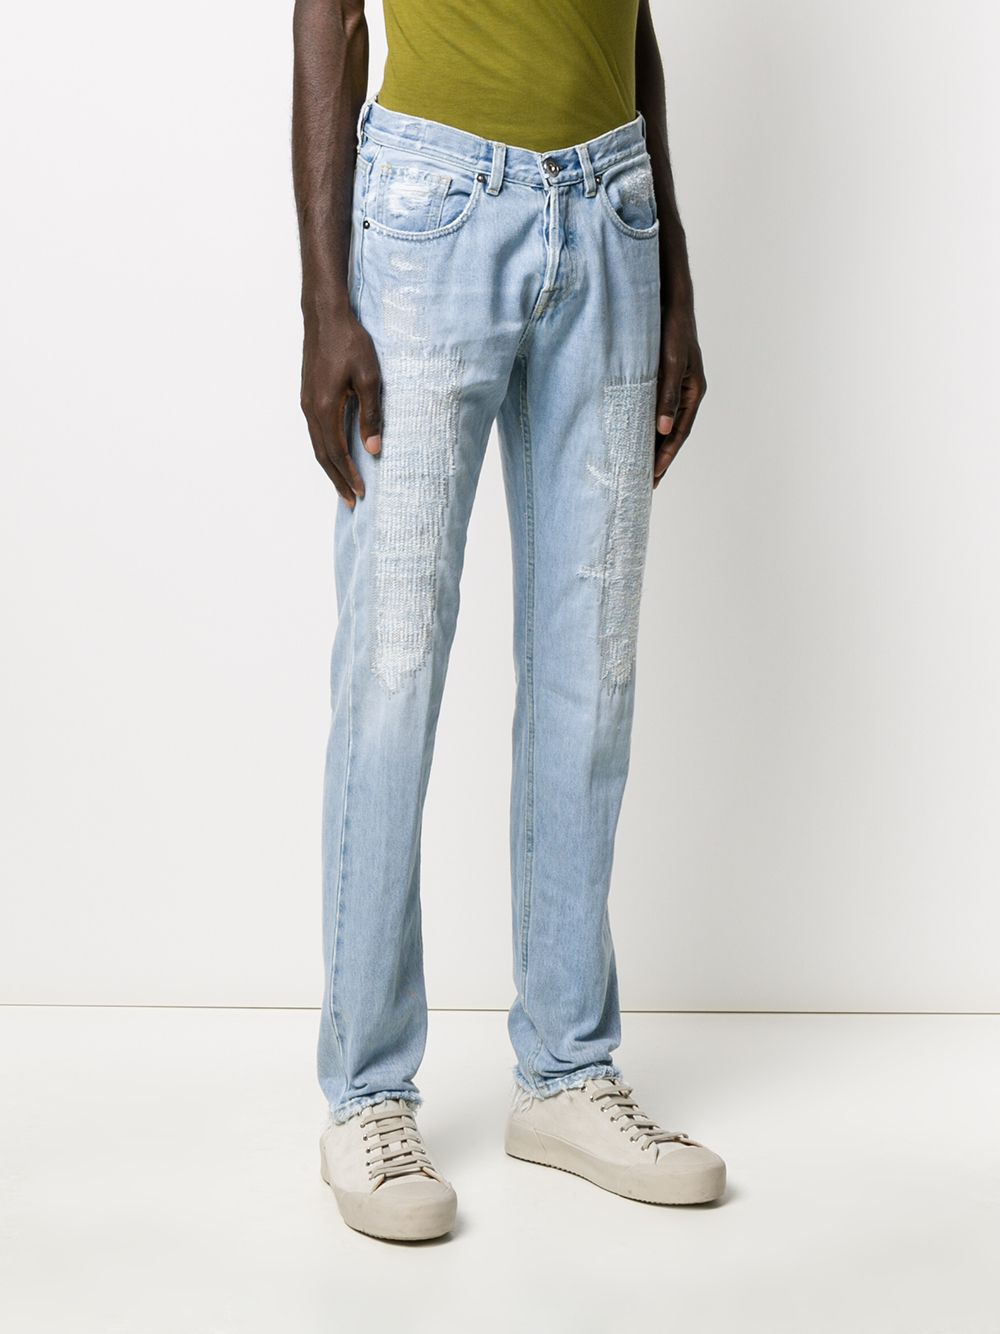 фото Eleventy джинсы стандартного кроя